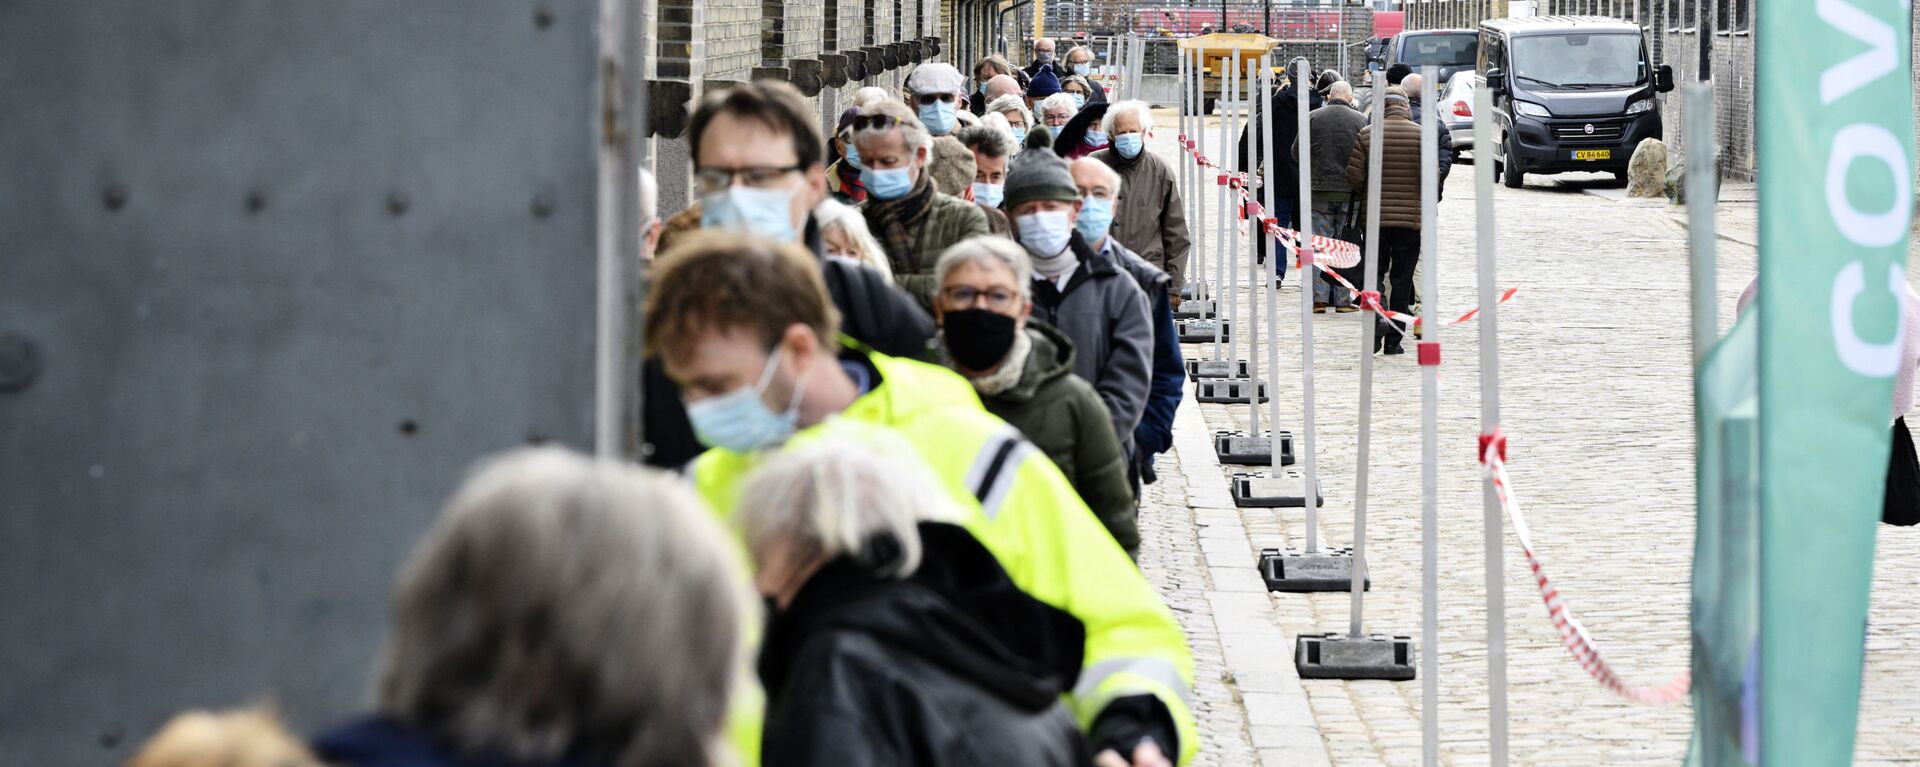 People queue outside the vaccination center in Oksnehallen in Copenhagen, Denmark, on April 12, 2021, during the ongoing coronavirus (Covid-19) pandemic.  - Sputnik International, 1920, 25.10.2021